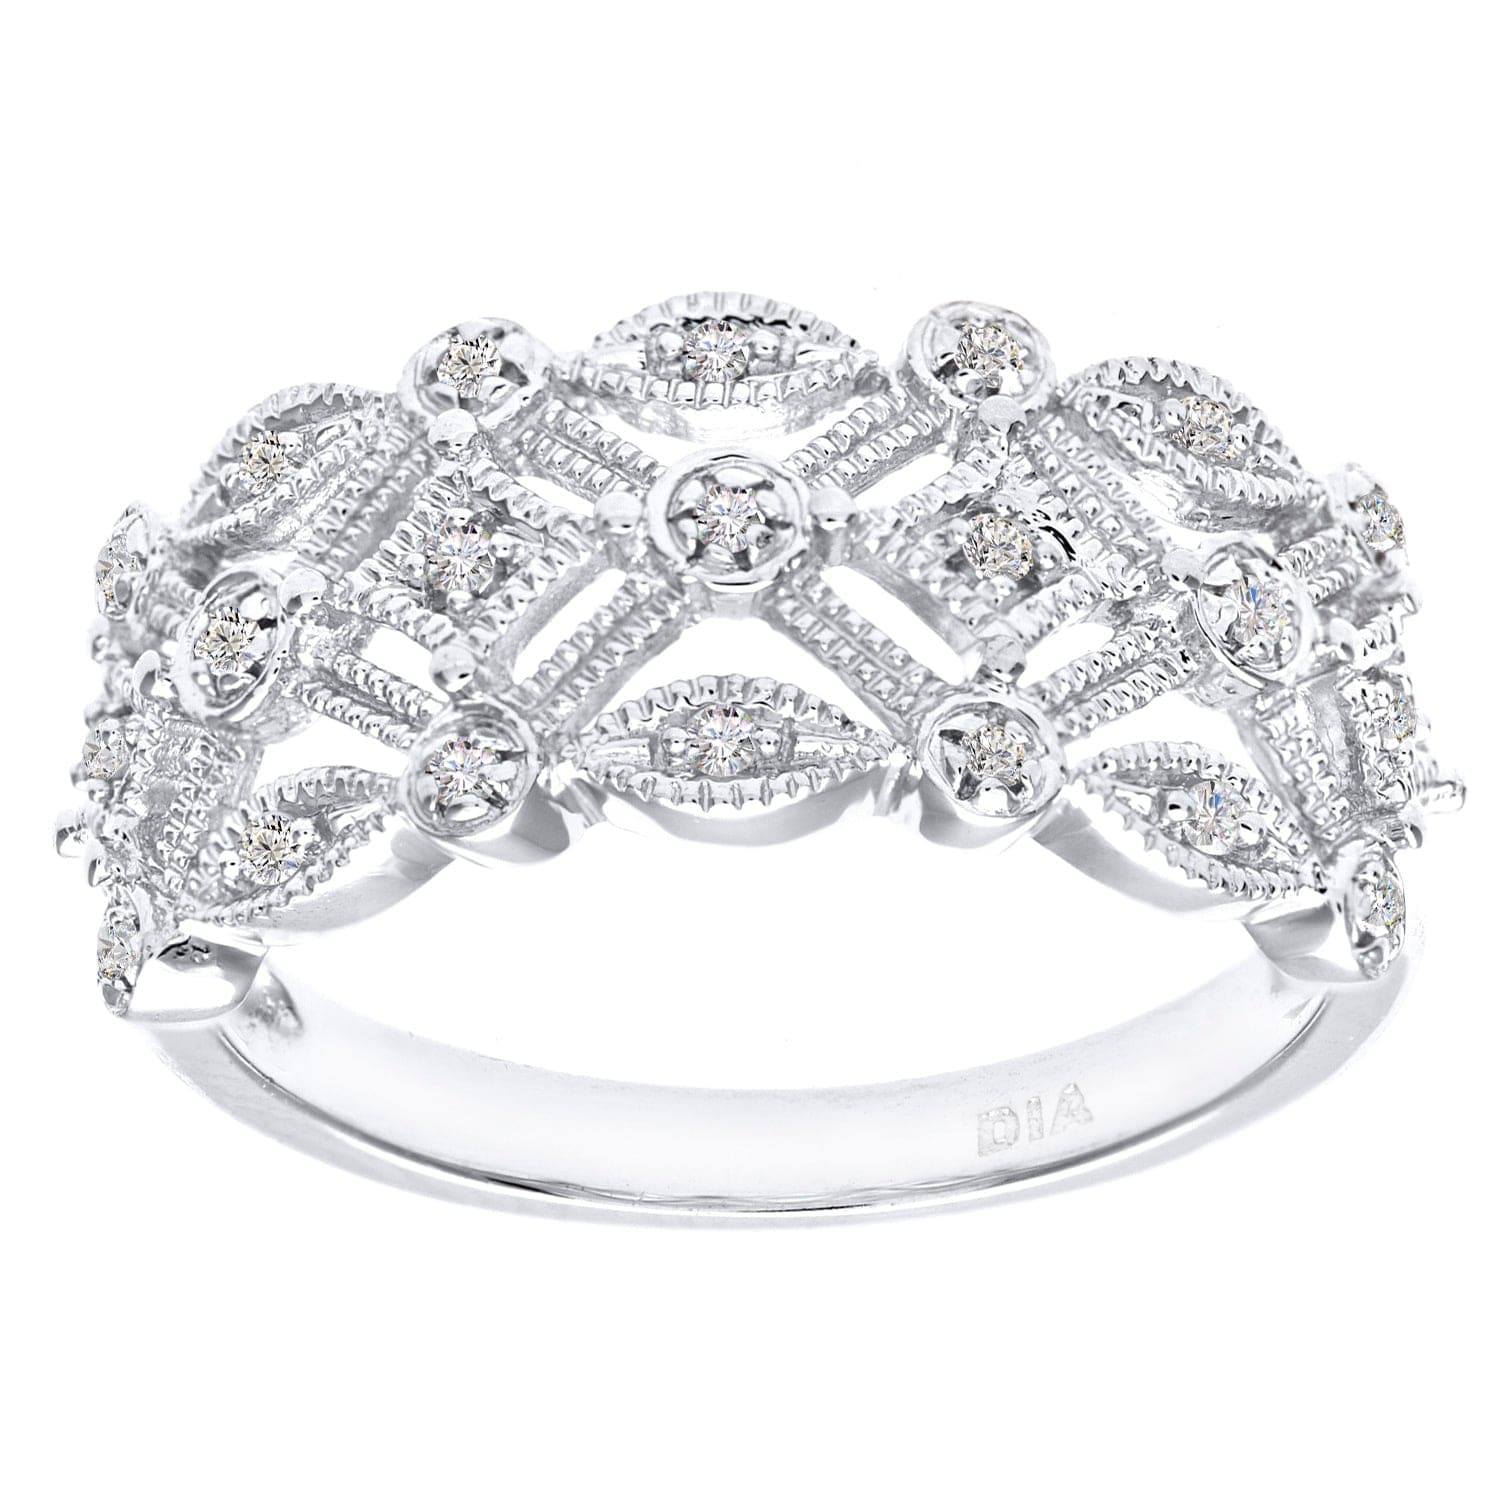 Lynora Luxe Ring White Gold 9ct / Diamond 9ct White Gold Diamond Ring